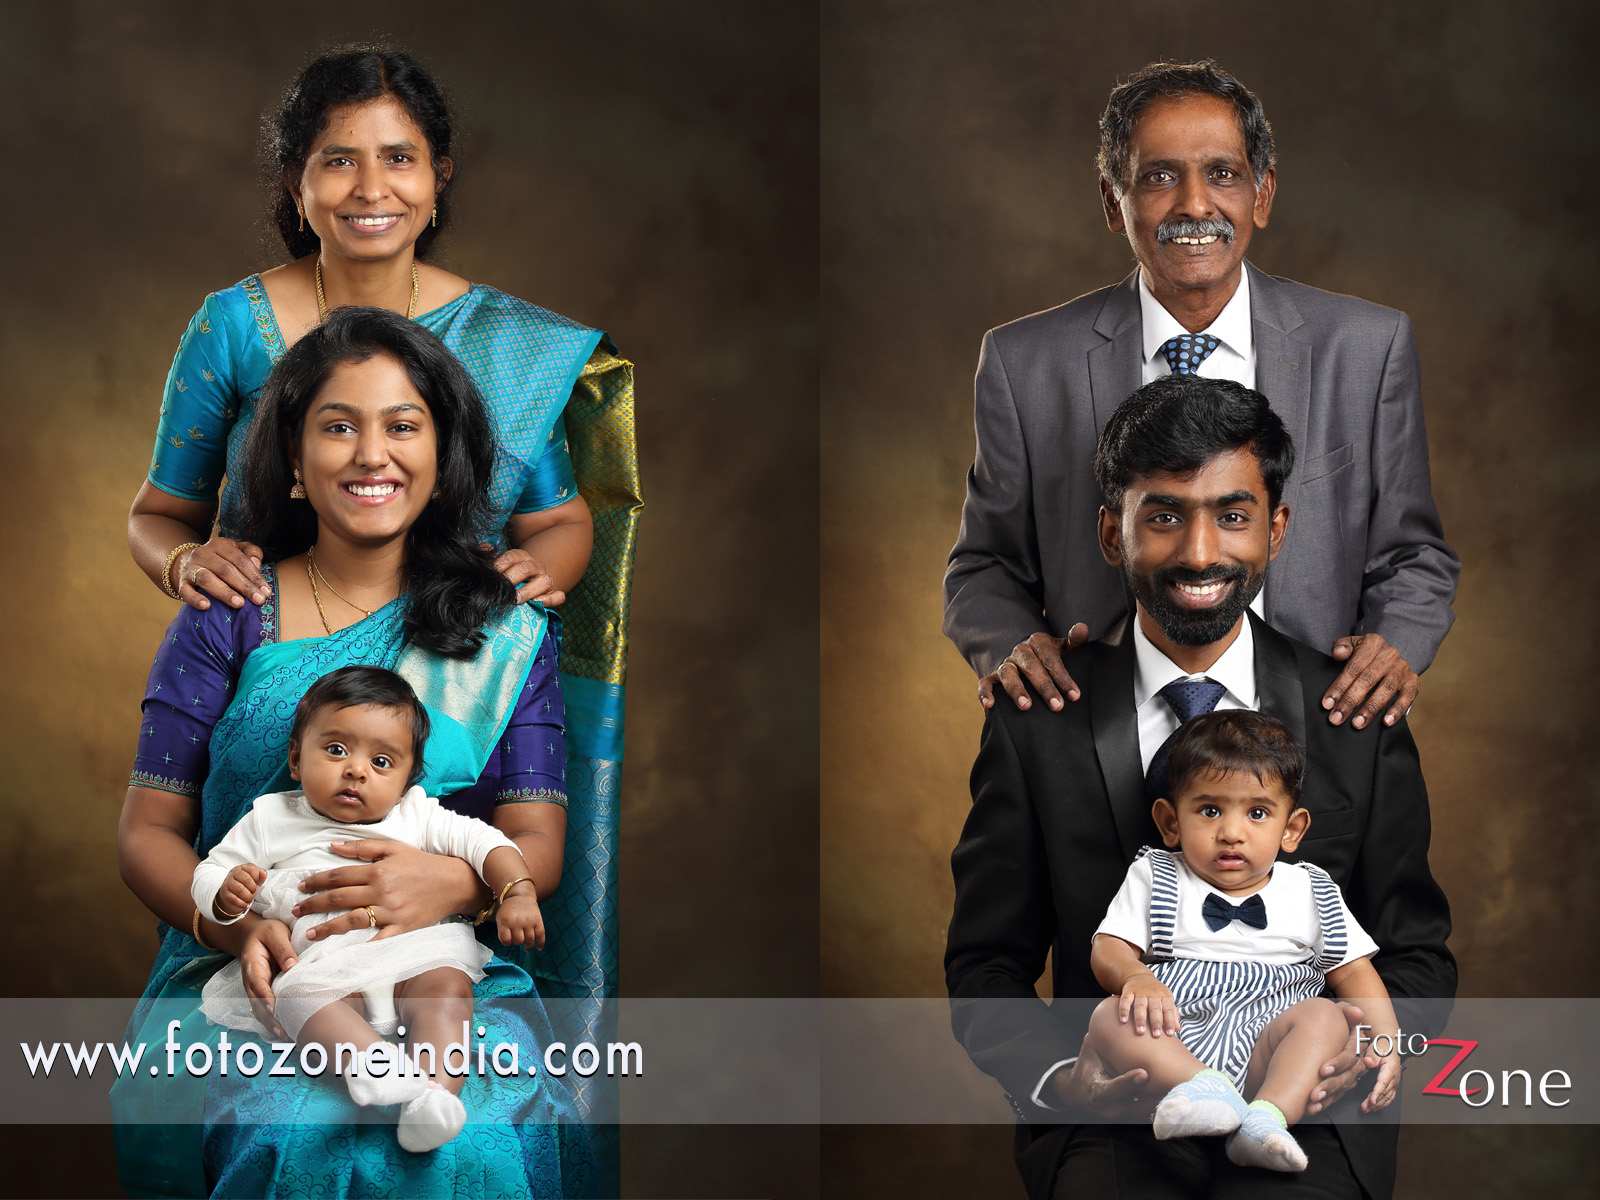 BHM Family Photoshoot | Family portrait photography poses, Family picture  poses, Family posing